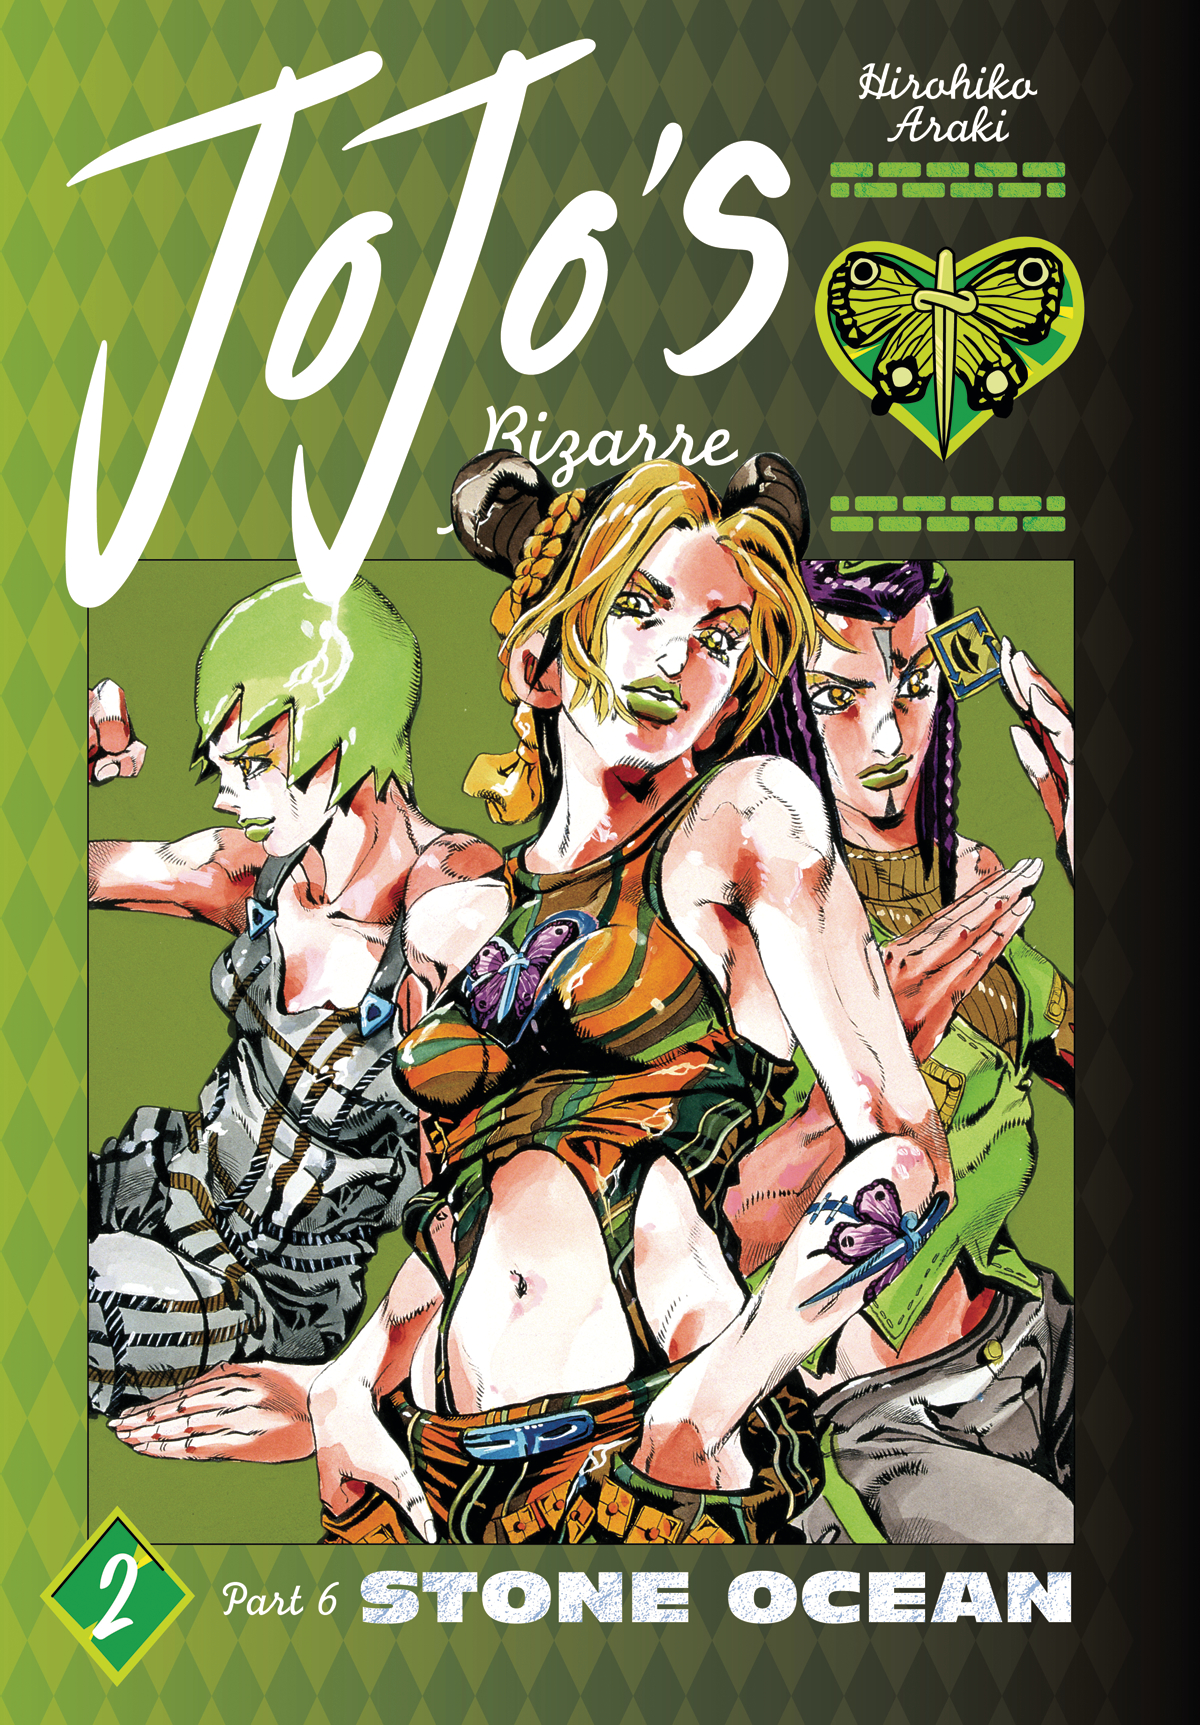 Jojos Bizarre Adventure Part 6 Stone Ocean Hardcover Manga Volume 2